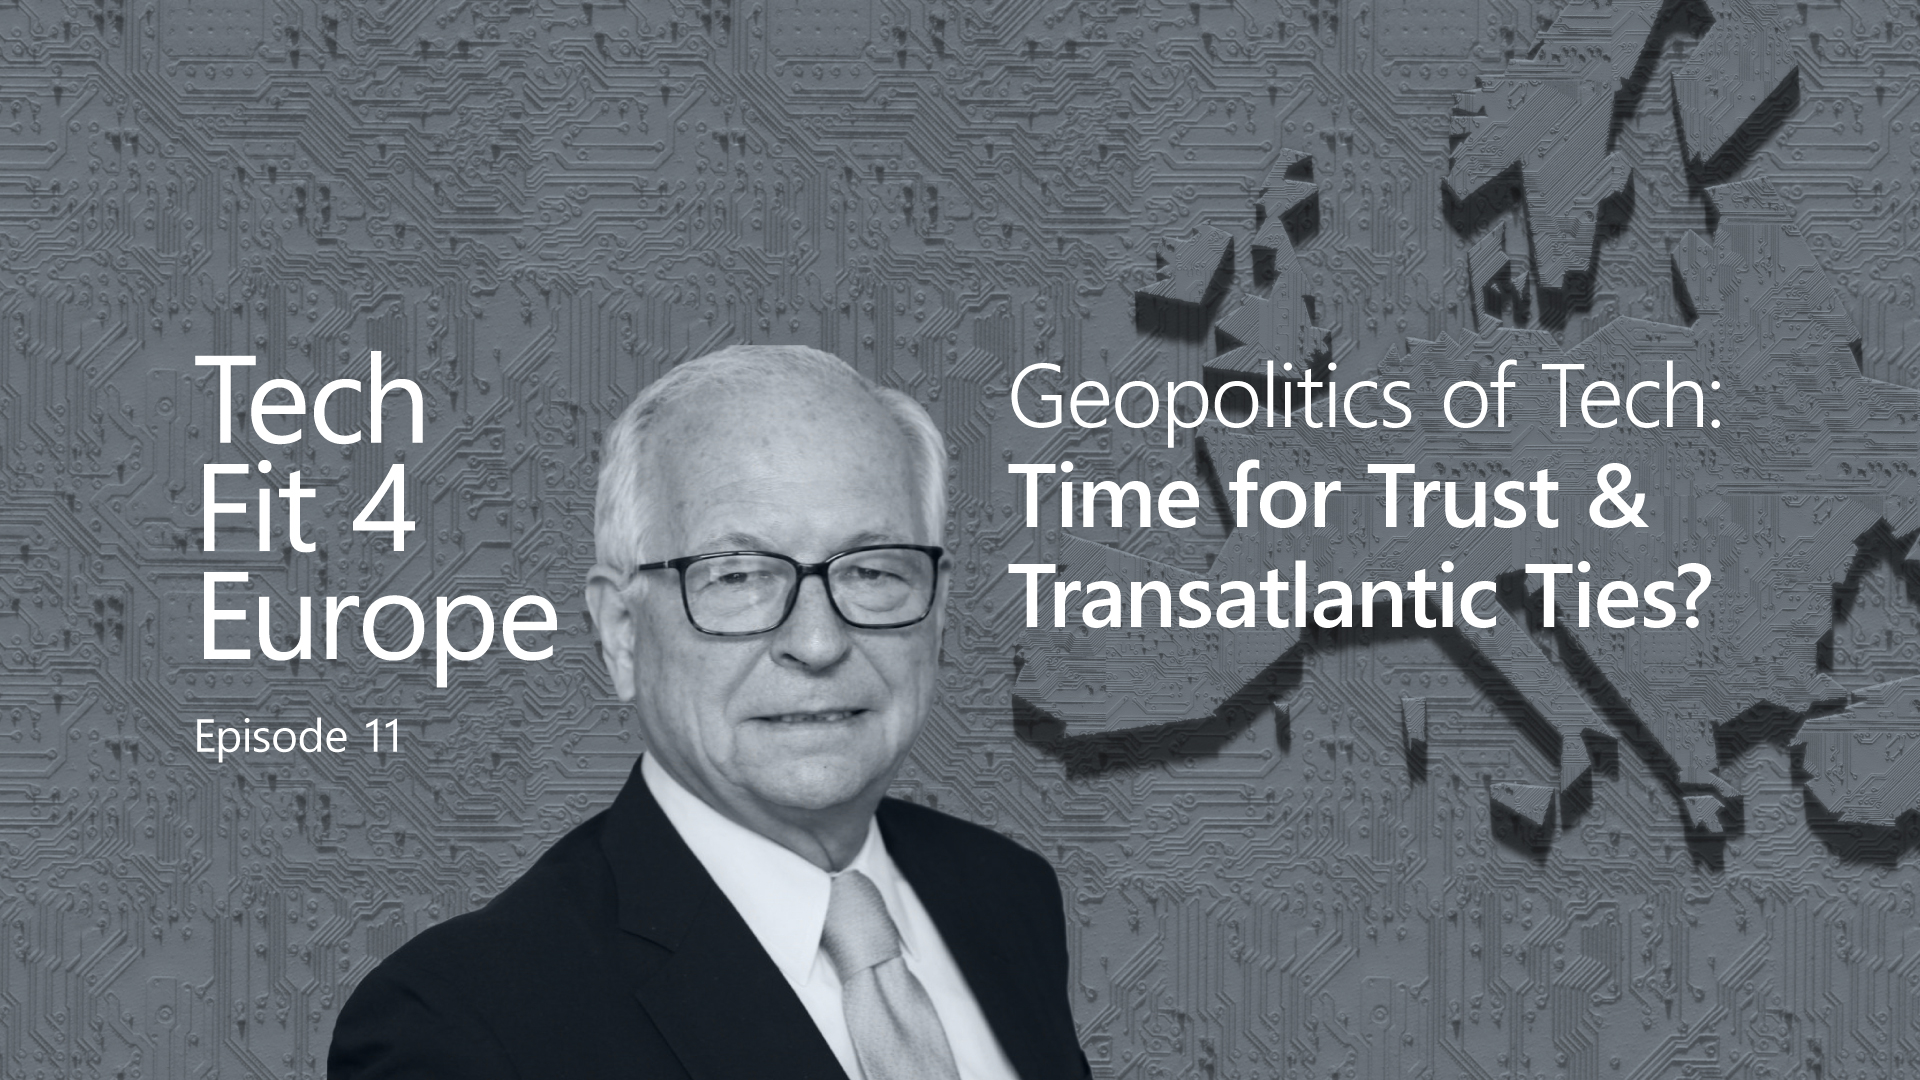 Tech Fit 4 Europe - Episode 11 - Geopolitics of Tech: Time for Trust & Transatlantic Ties?